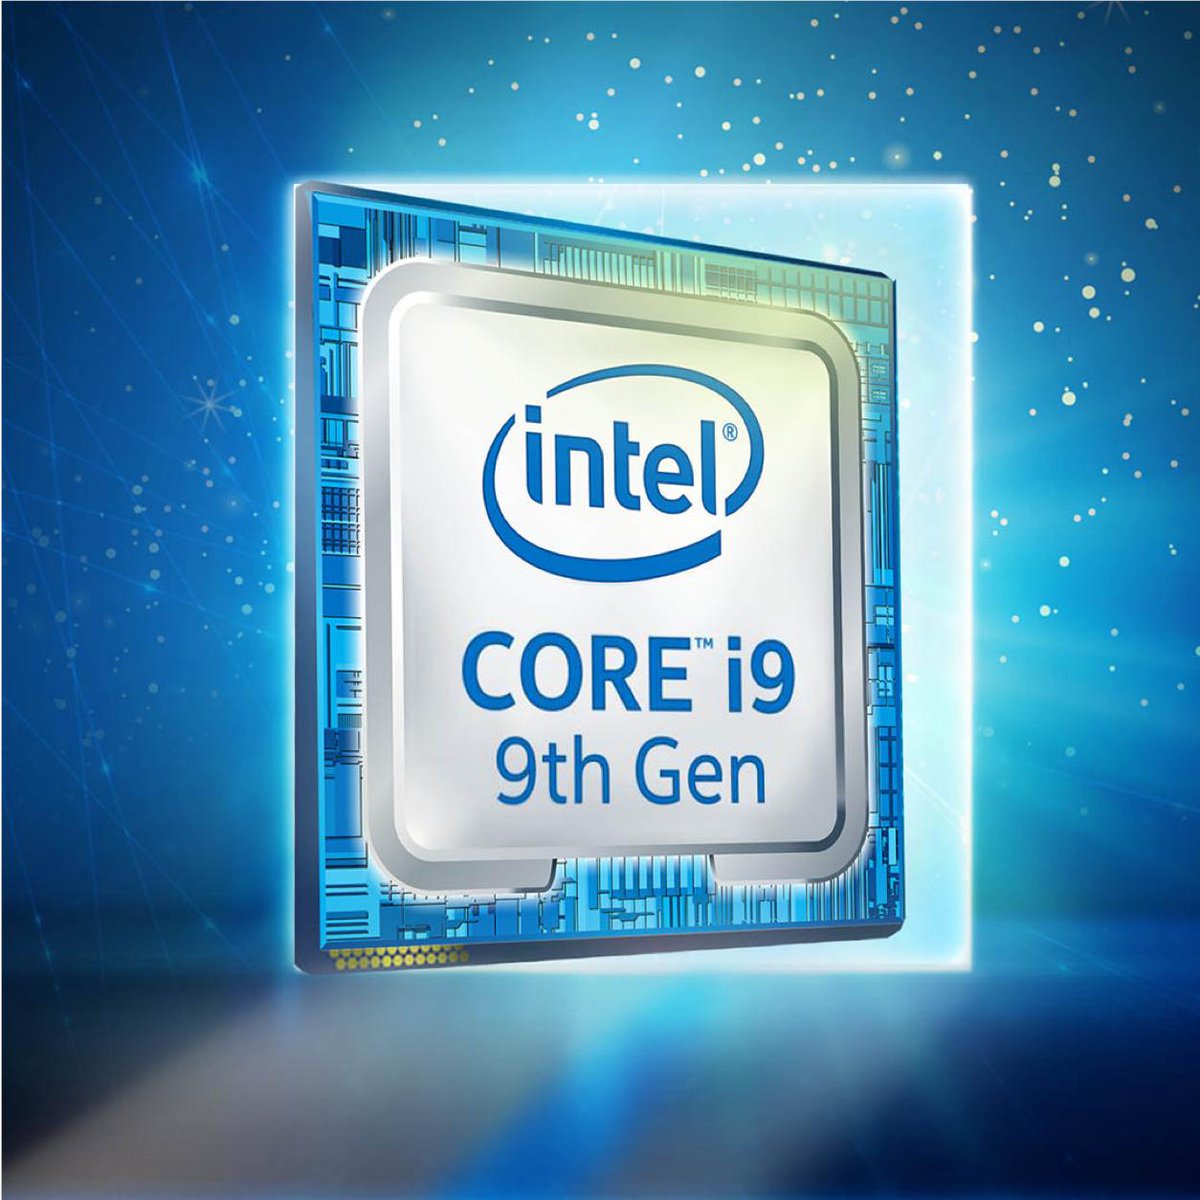 Купить интел i3. Core i7 9gen. Intel i9 9300. Intel Core i3 3 Gen. Процессор i9.